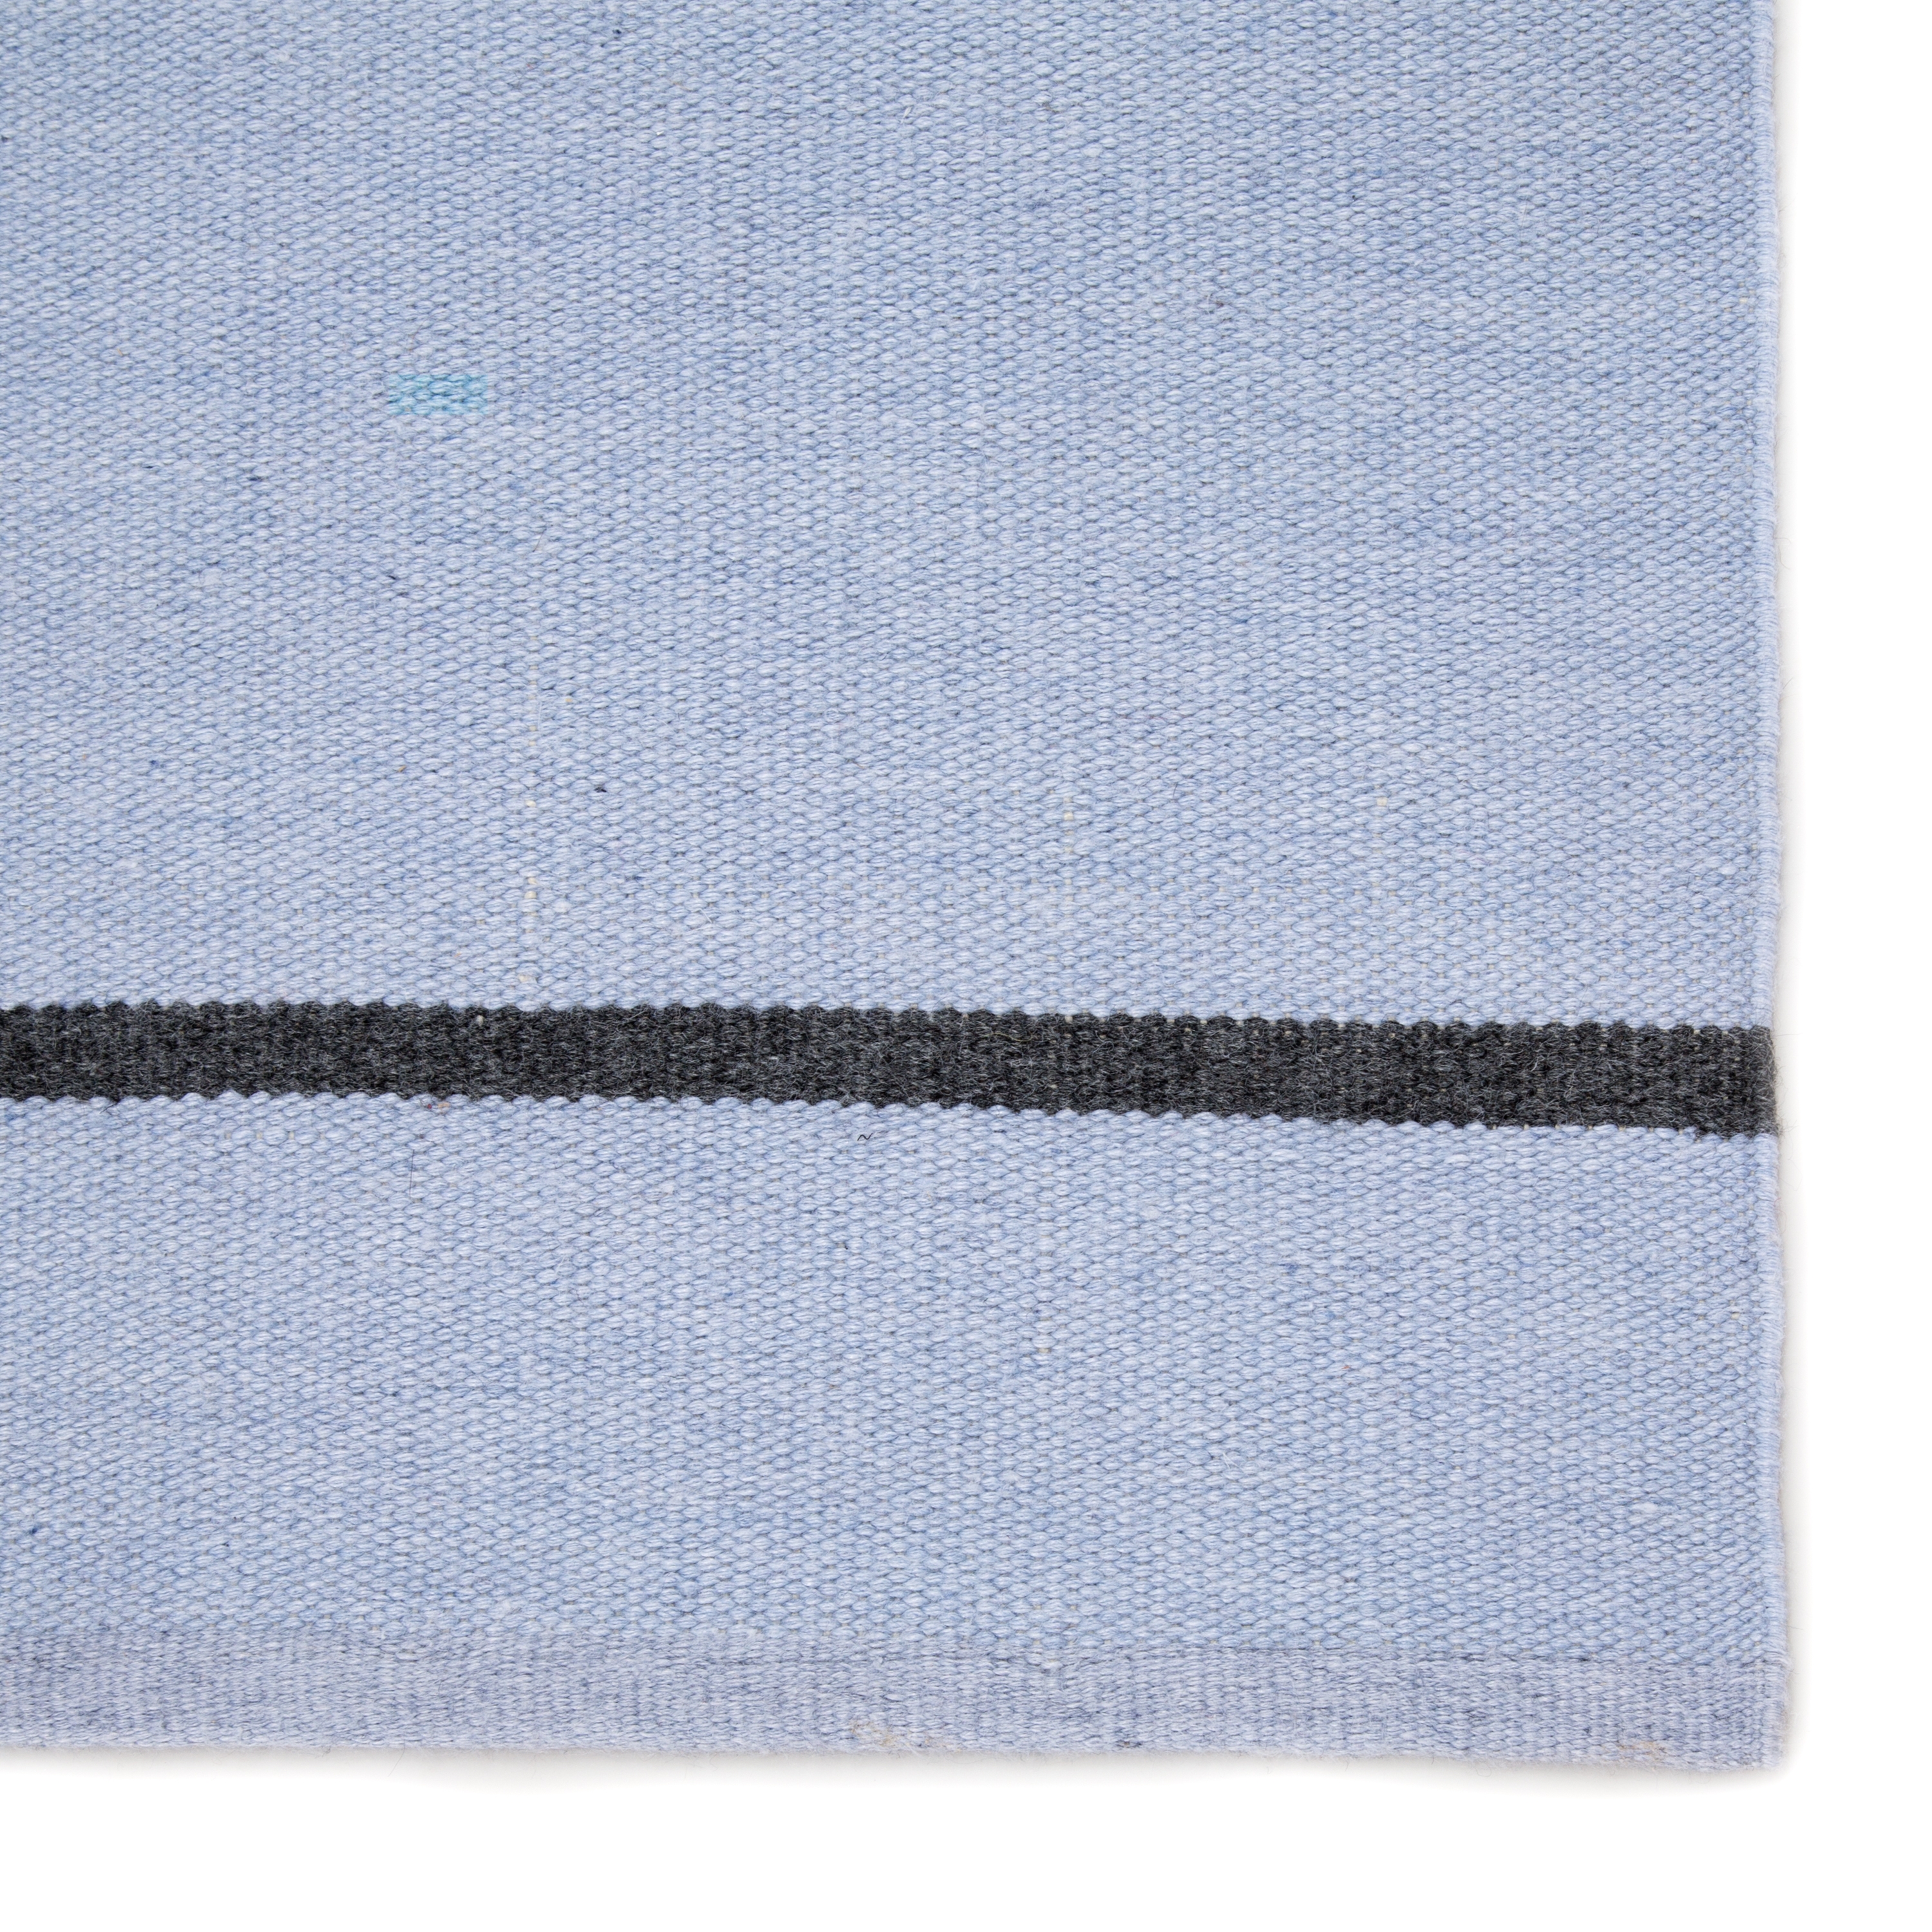 Corbina Indoor/Outdoor Stripe Area Rug, Light Blue & Gray, 5' x 8' - Image 3